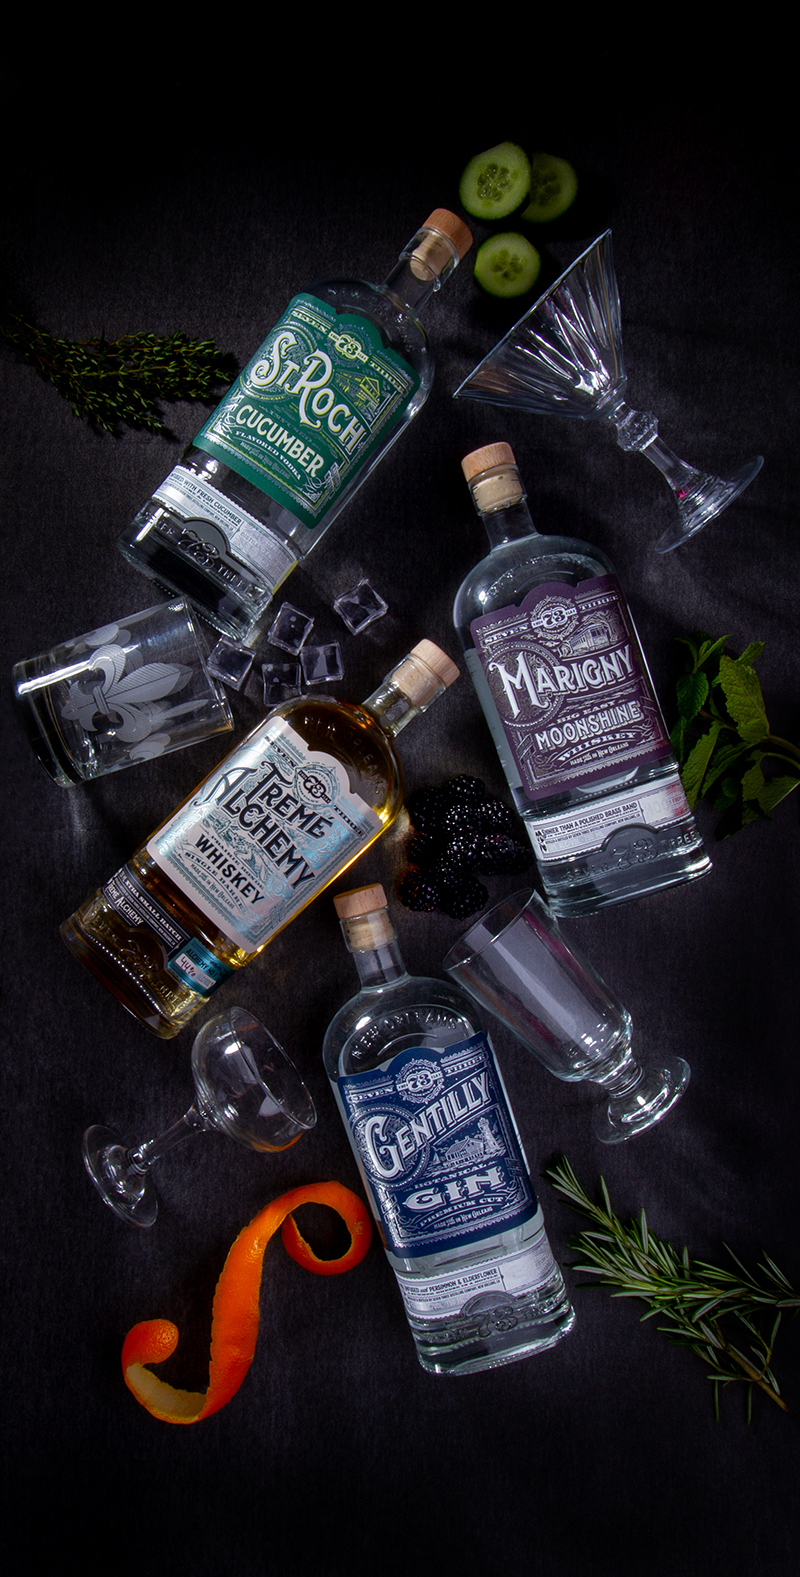 Bottles of Seven-Three Distilling Company's New Orleans-inspired spirits.